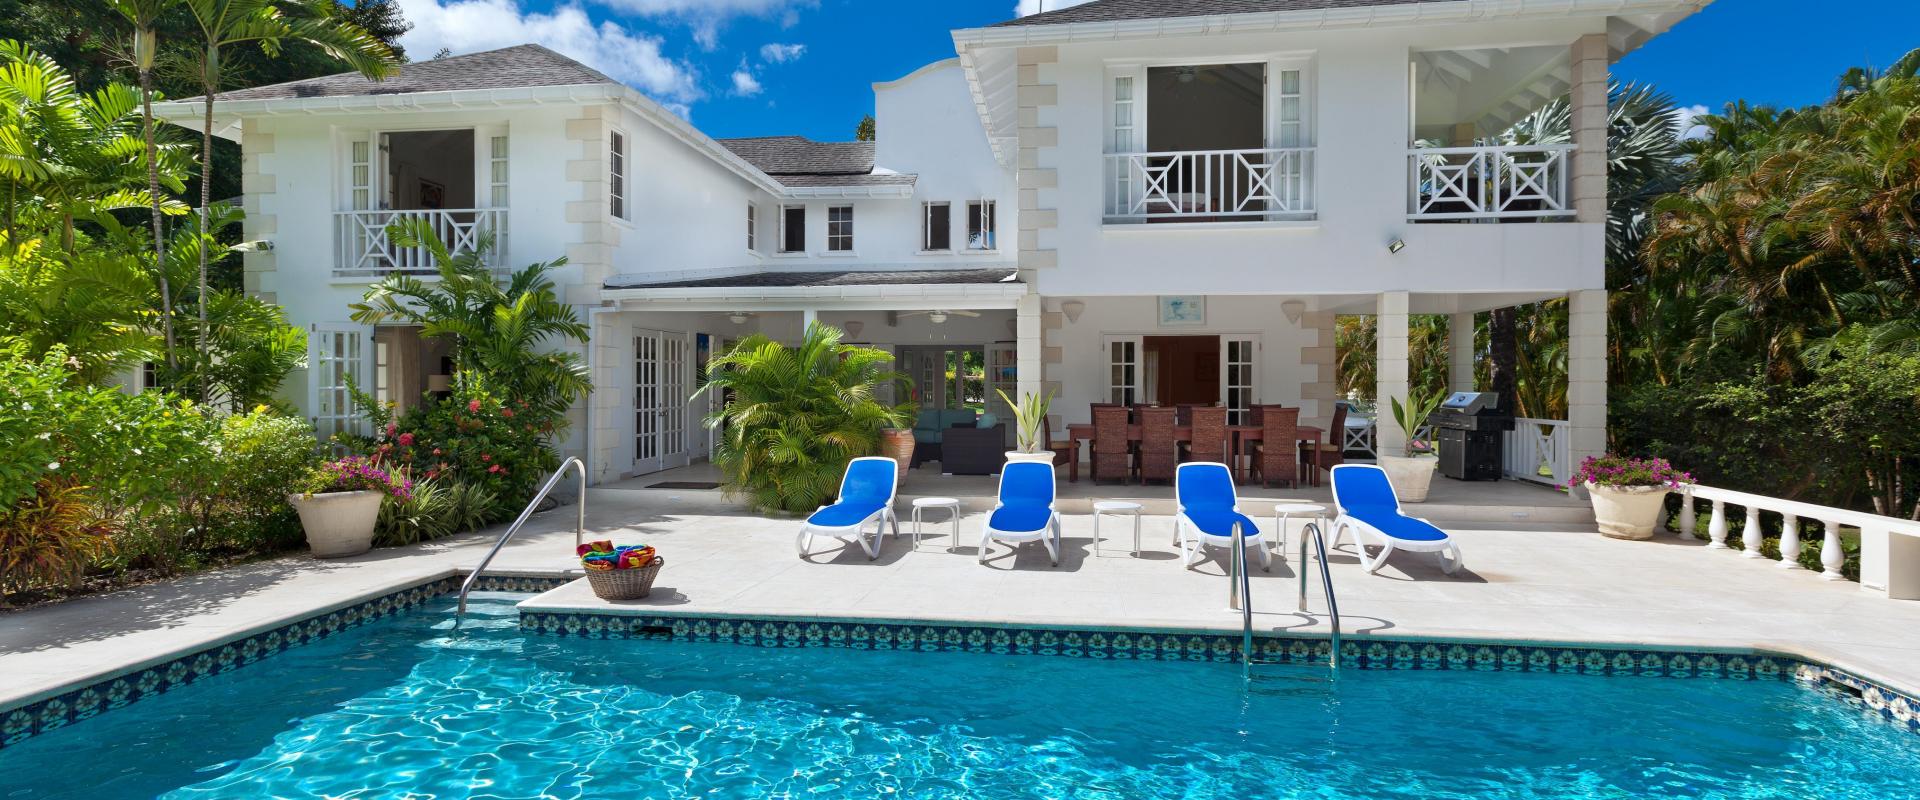 Barbados Holiday Rental Rose Of Sharon Sandy Lane Pool to House